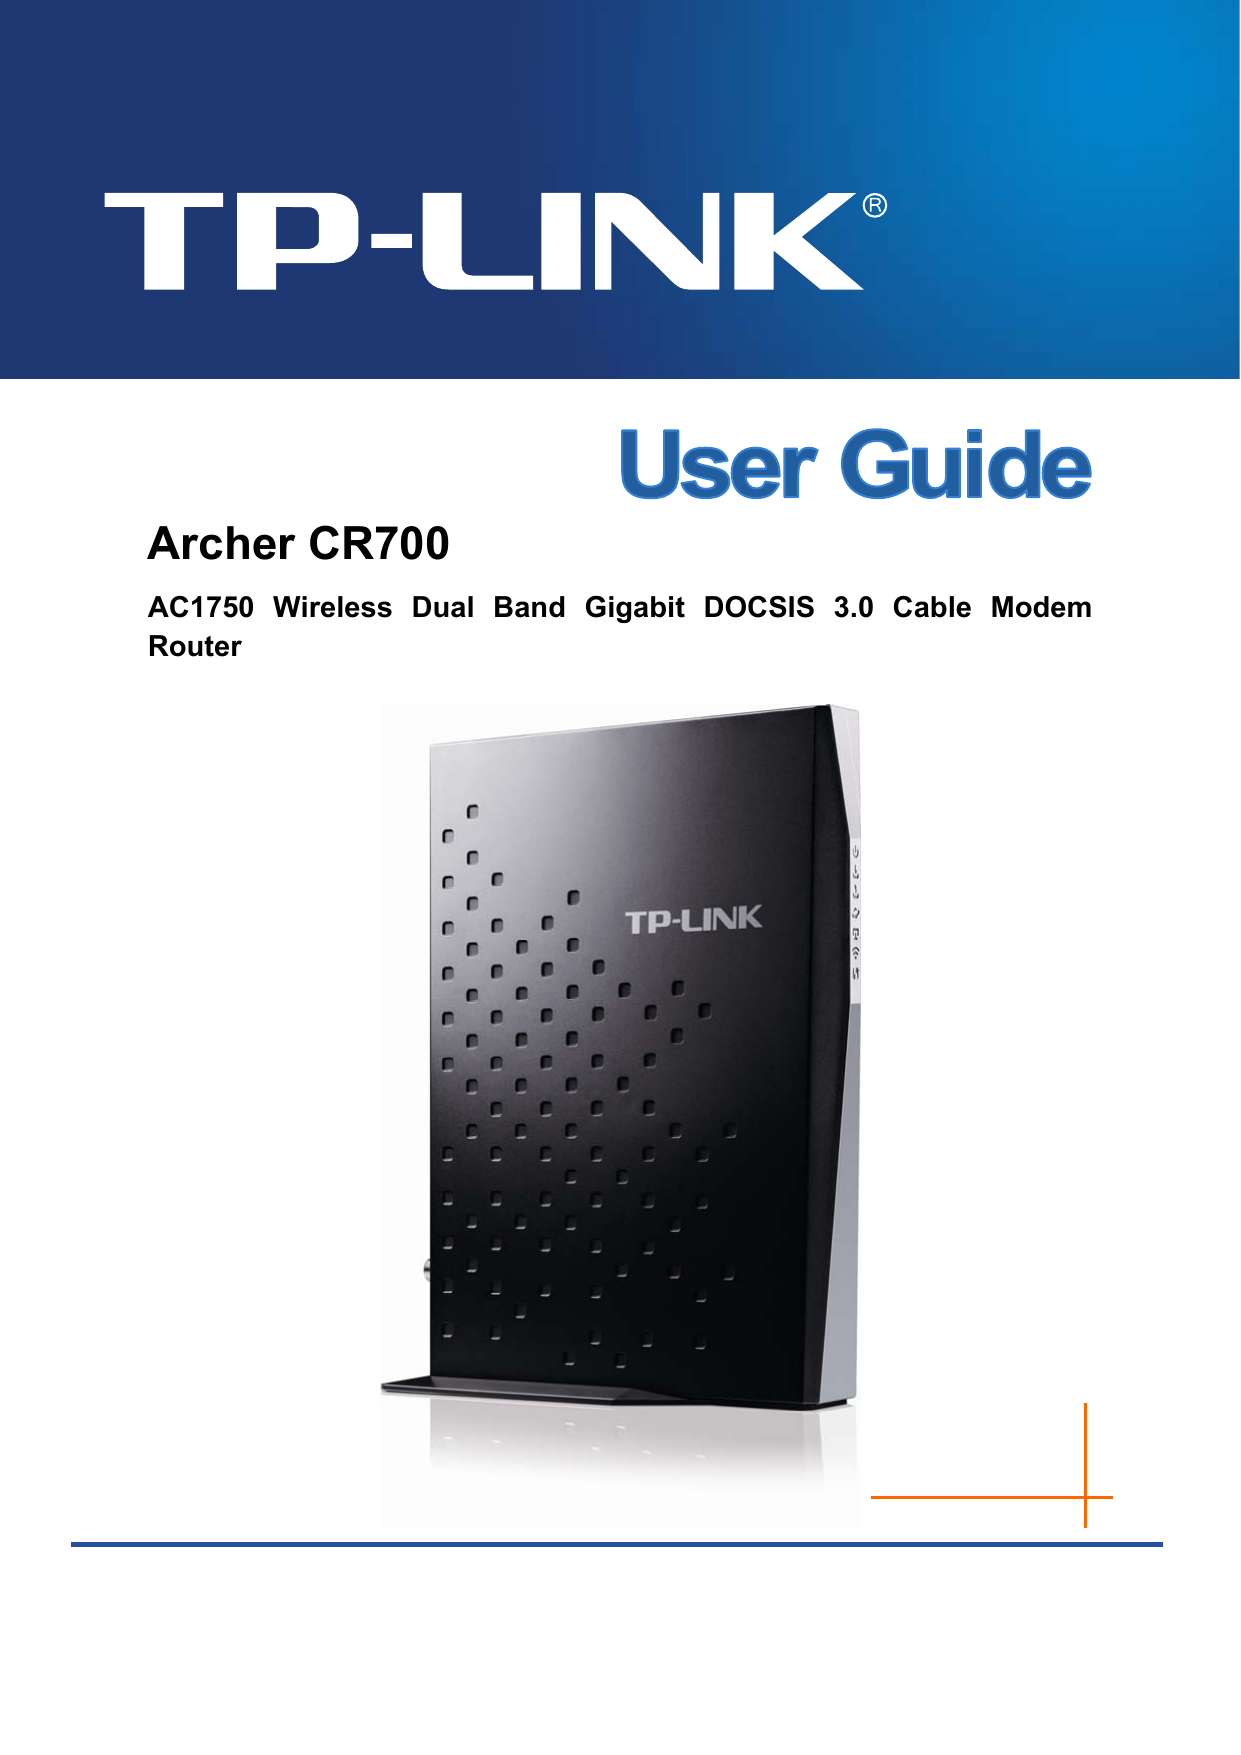    Archer CR700 AC1750 Wireless Dual Band Gigabit DOCSIS 3.0 Cable Modem Router 